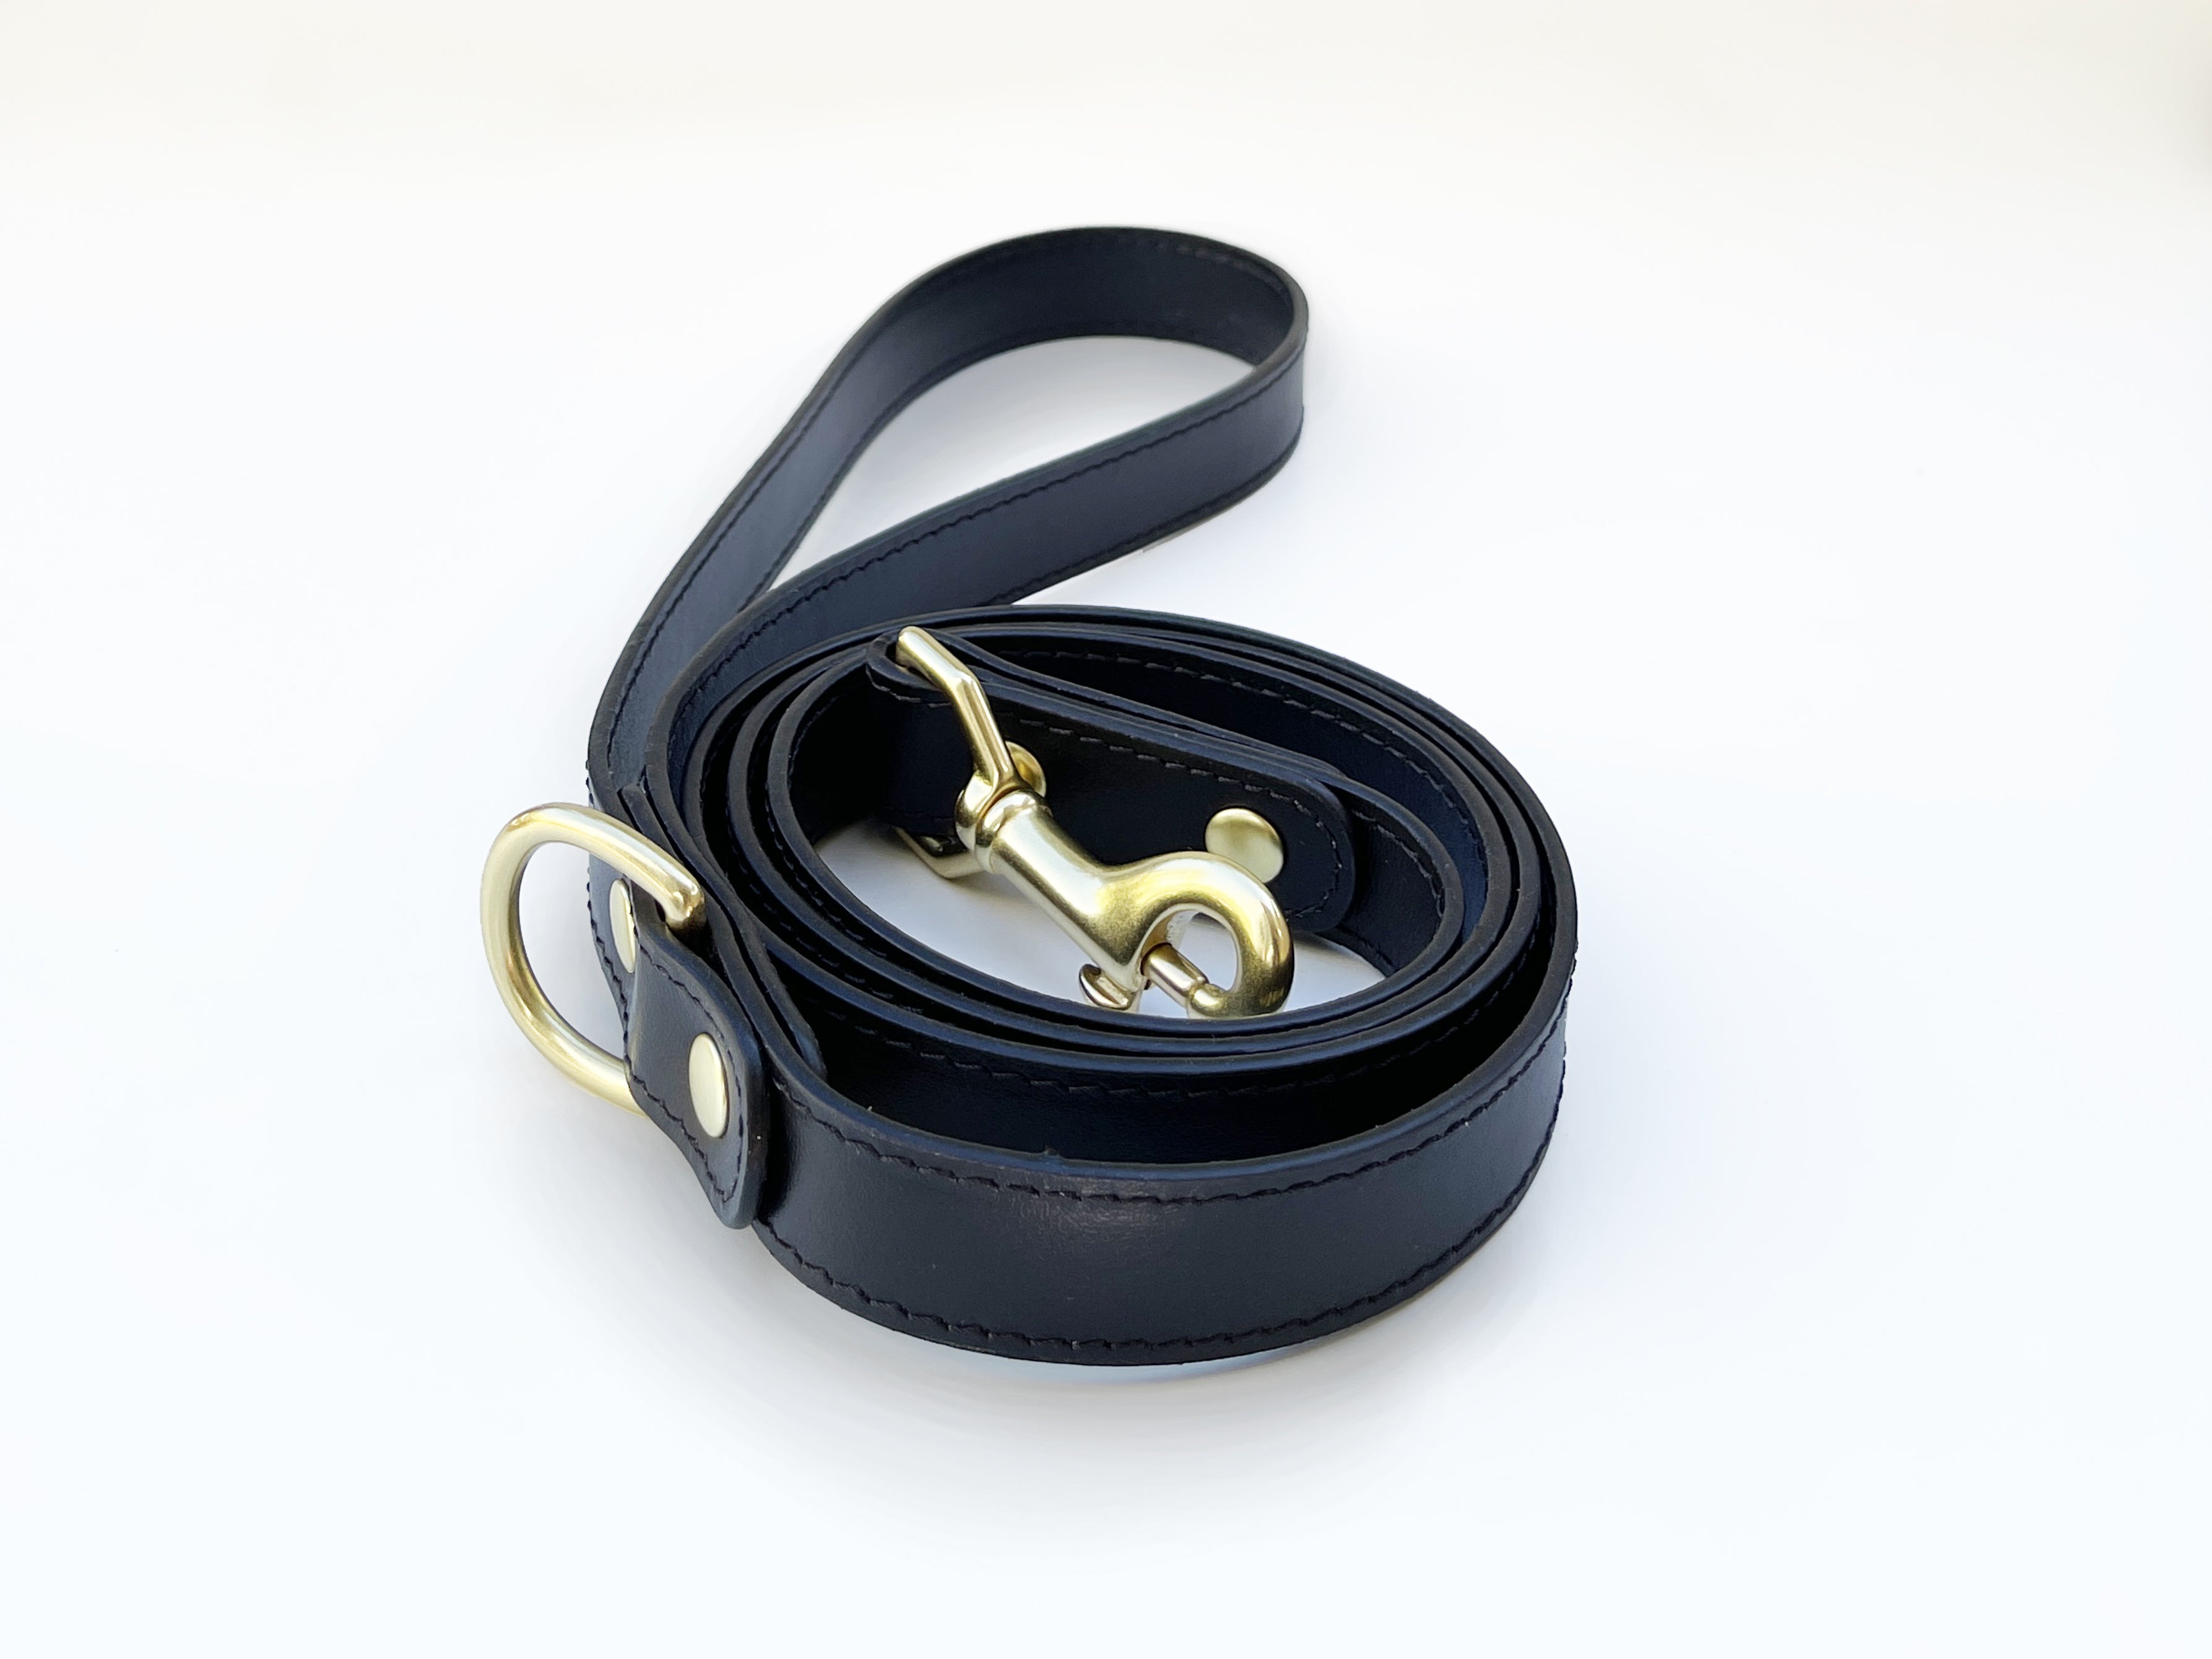 Onyx Black leather leash